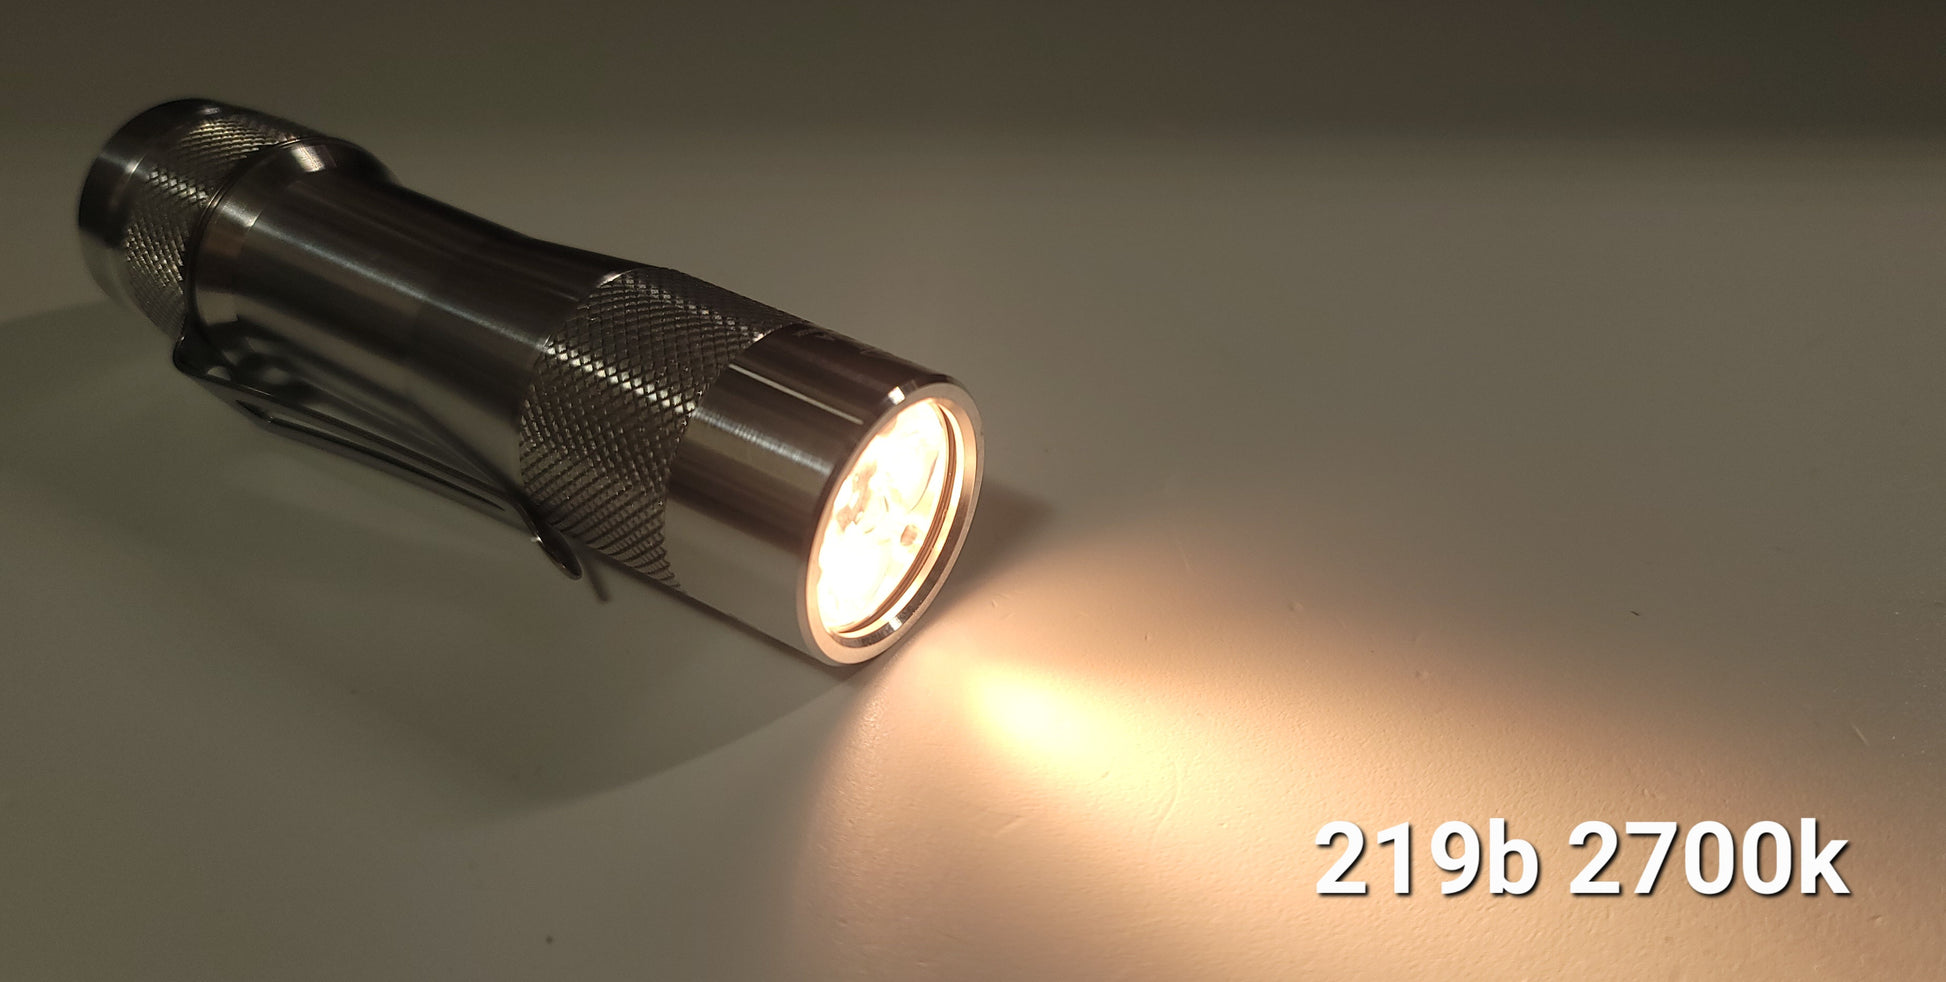 Lumintop FW3A (RAW) Aluminum LED Flashlight